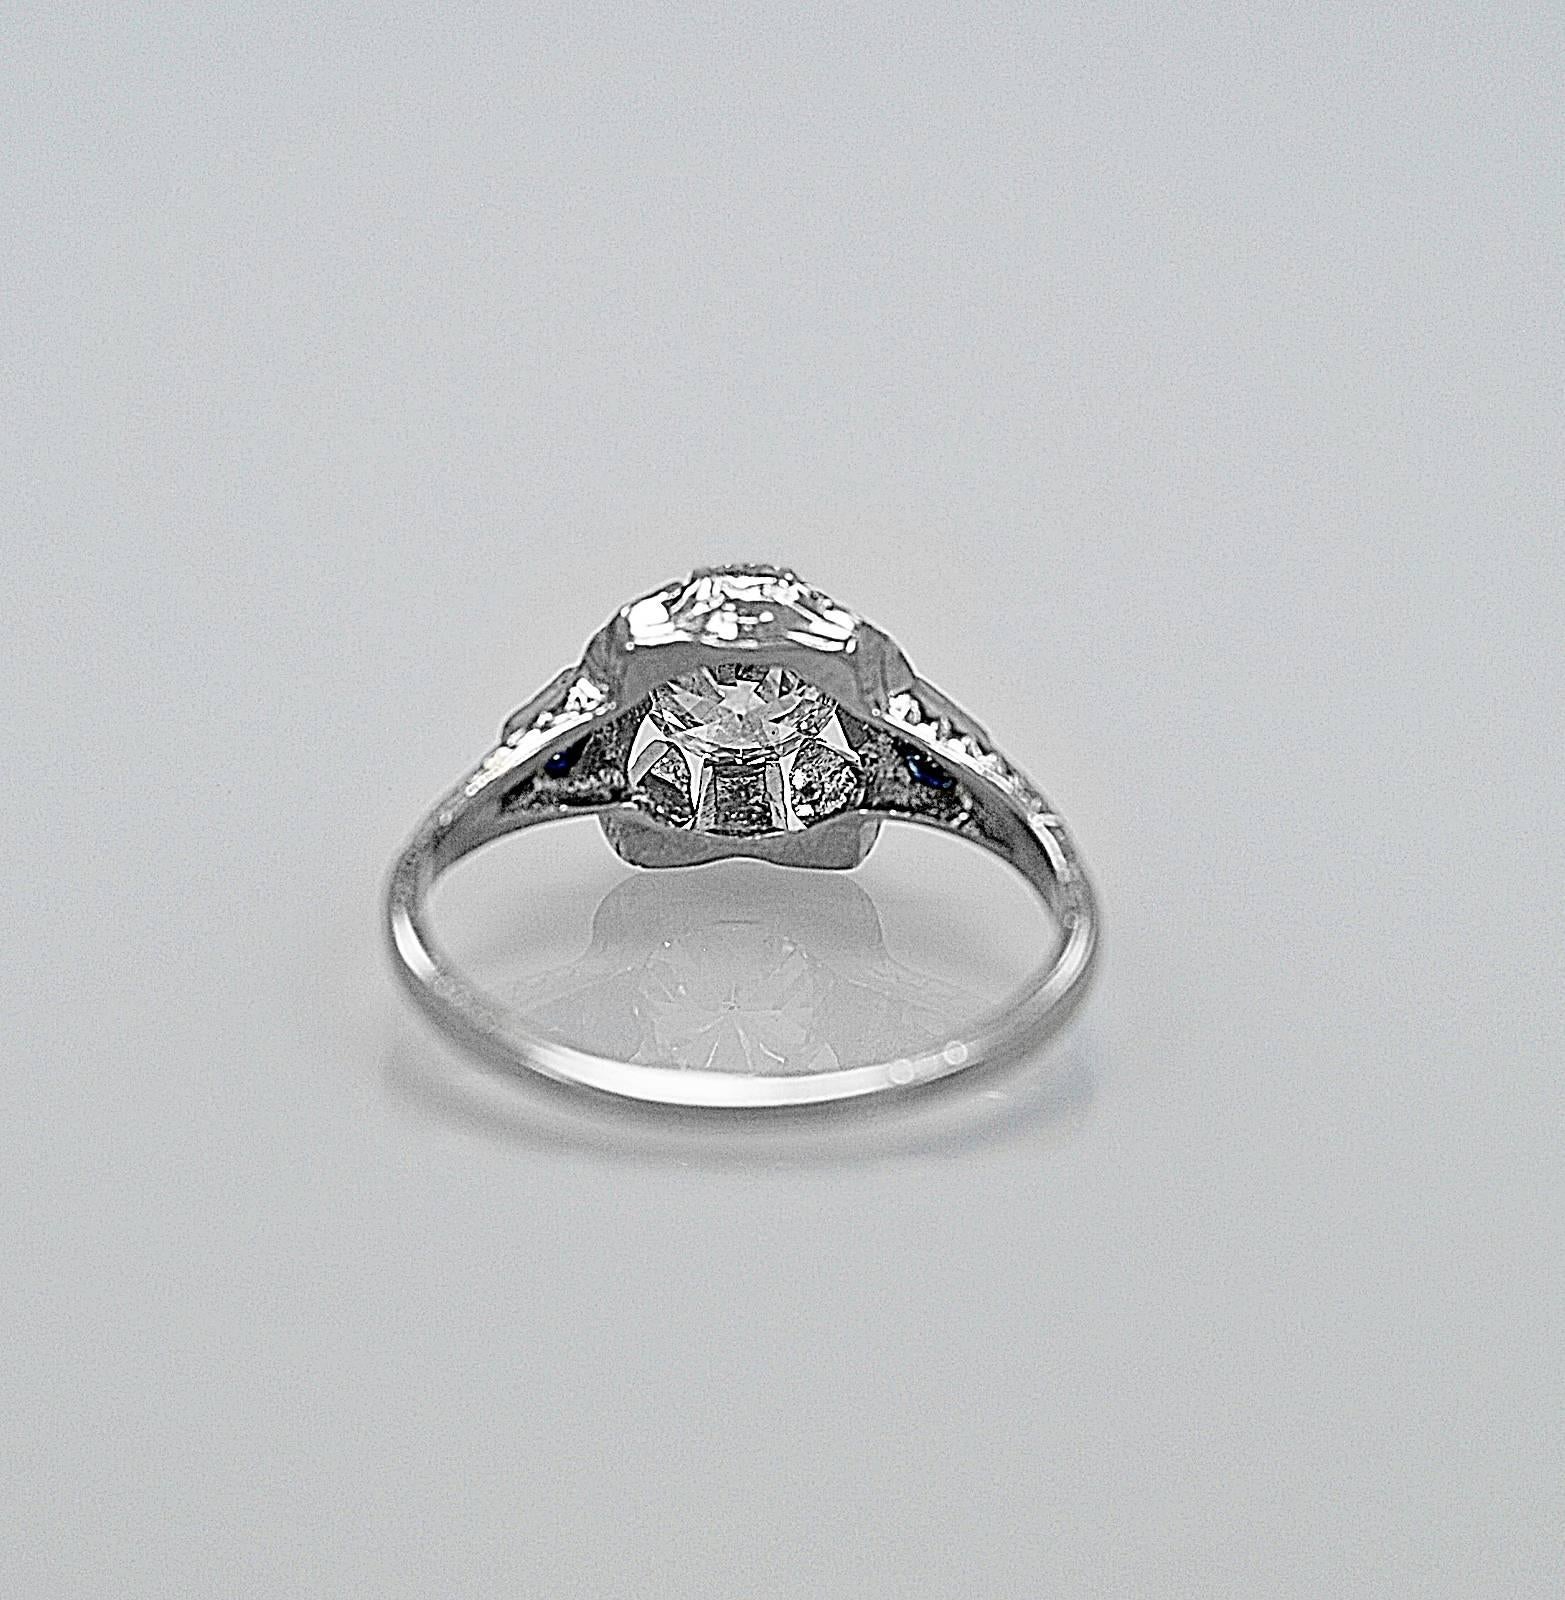 .89 carat diamond